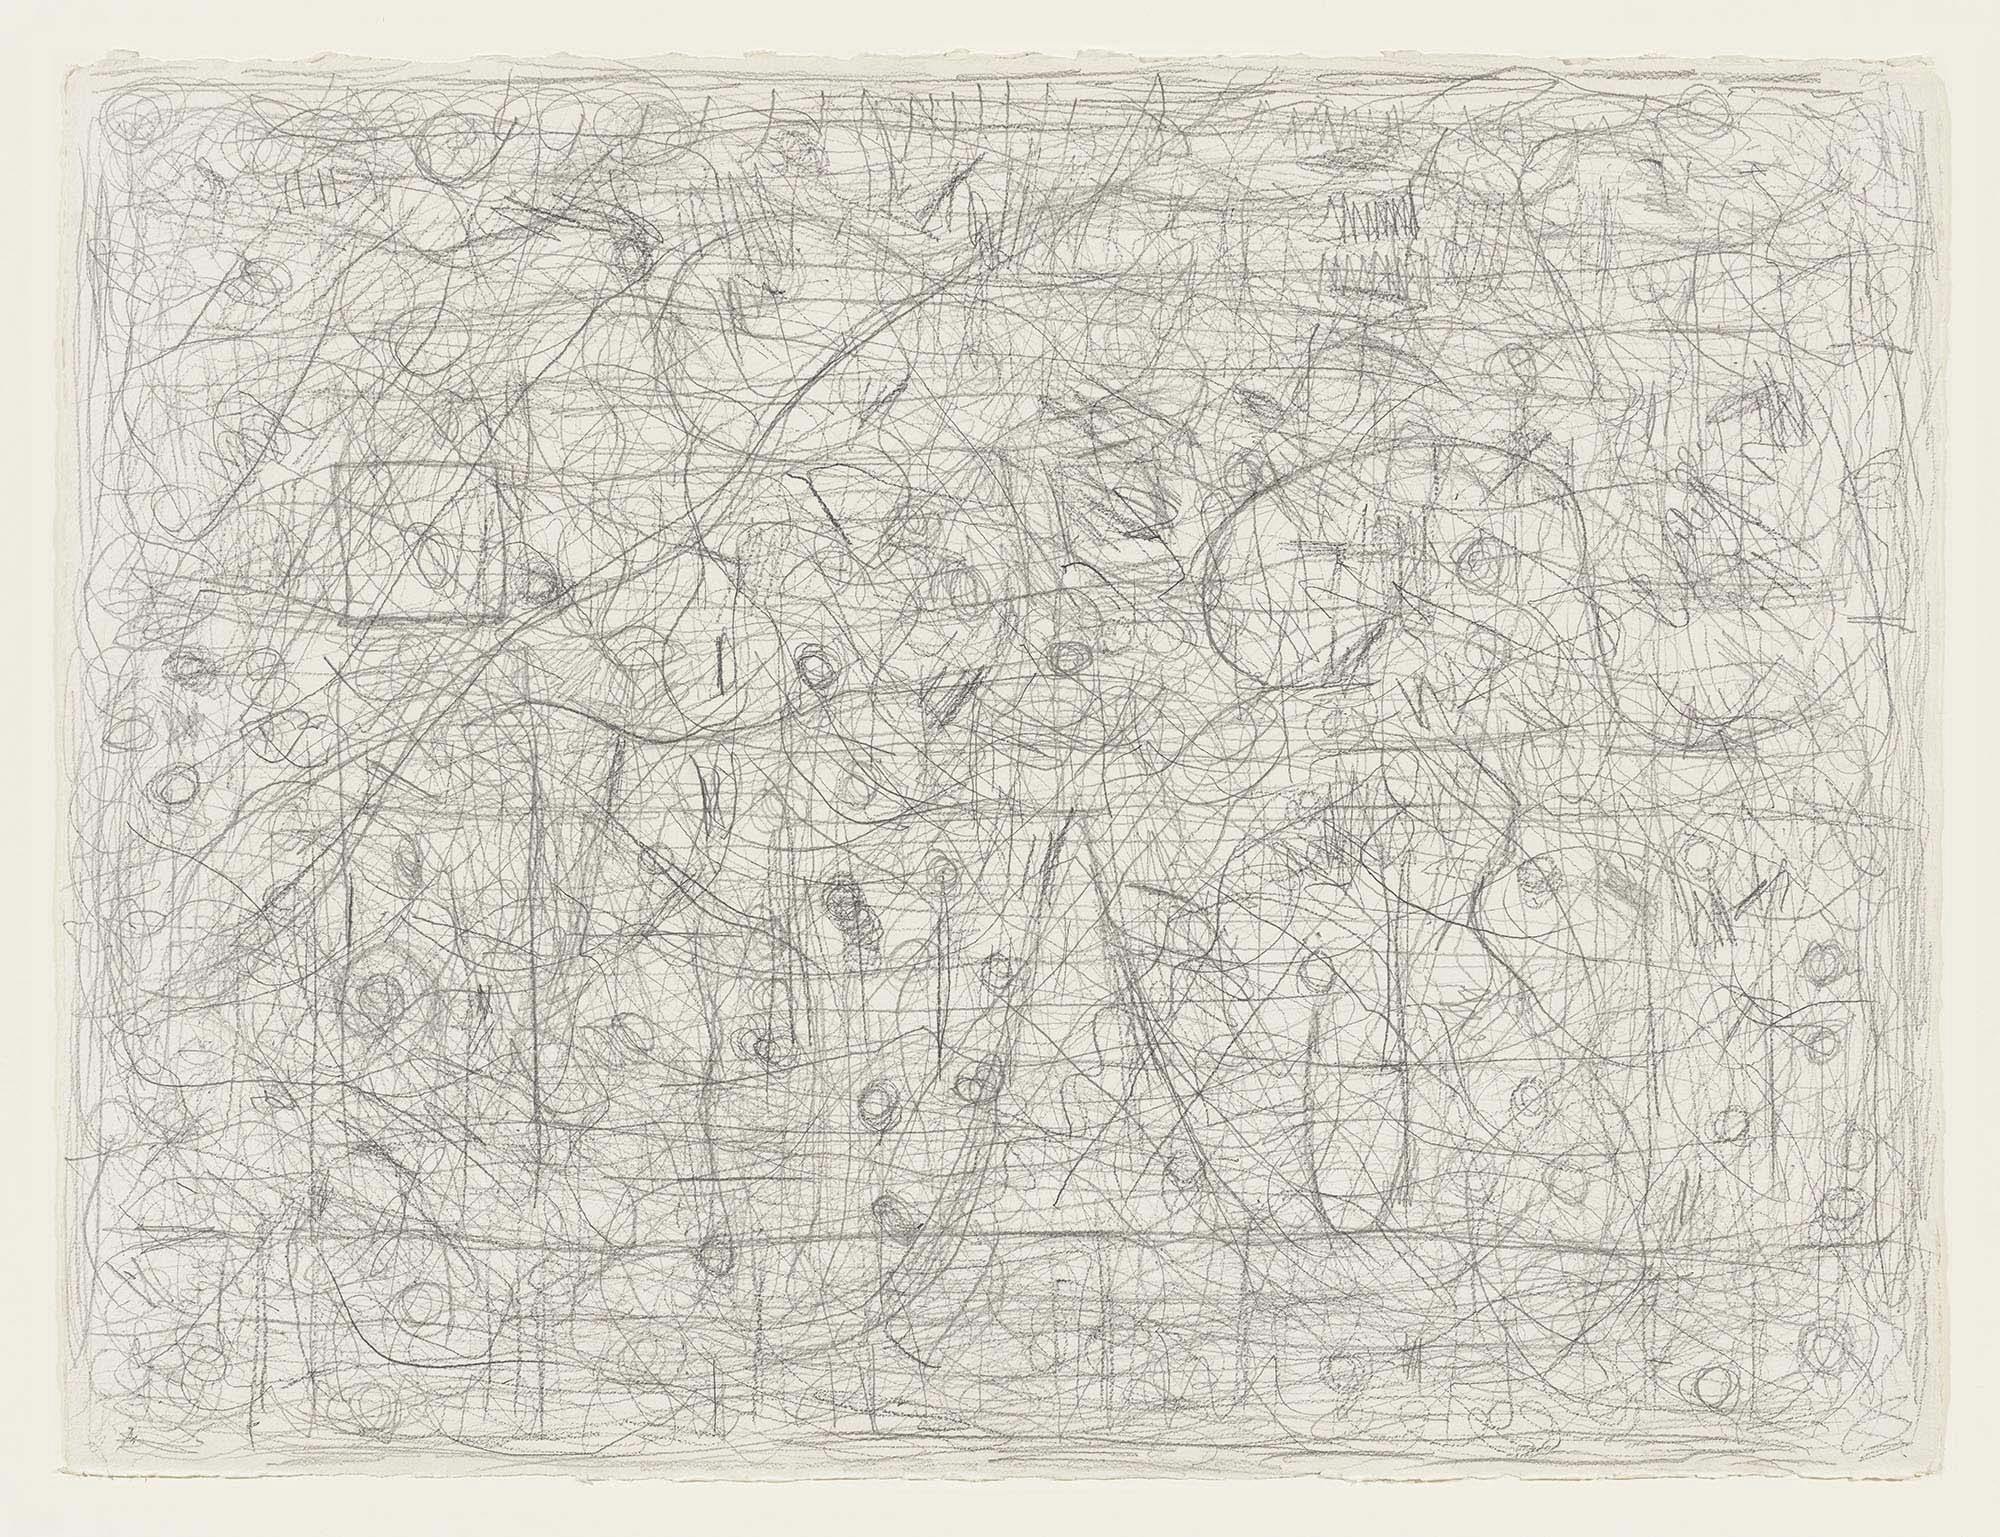 Past Ceylon
1976
Graphite on paper
22 1/2 x 30 in. (57.2 x 76.2 cm)
 – The Richard Pousette-Dart Foundation